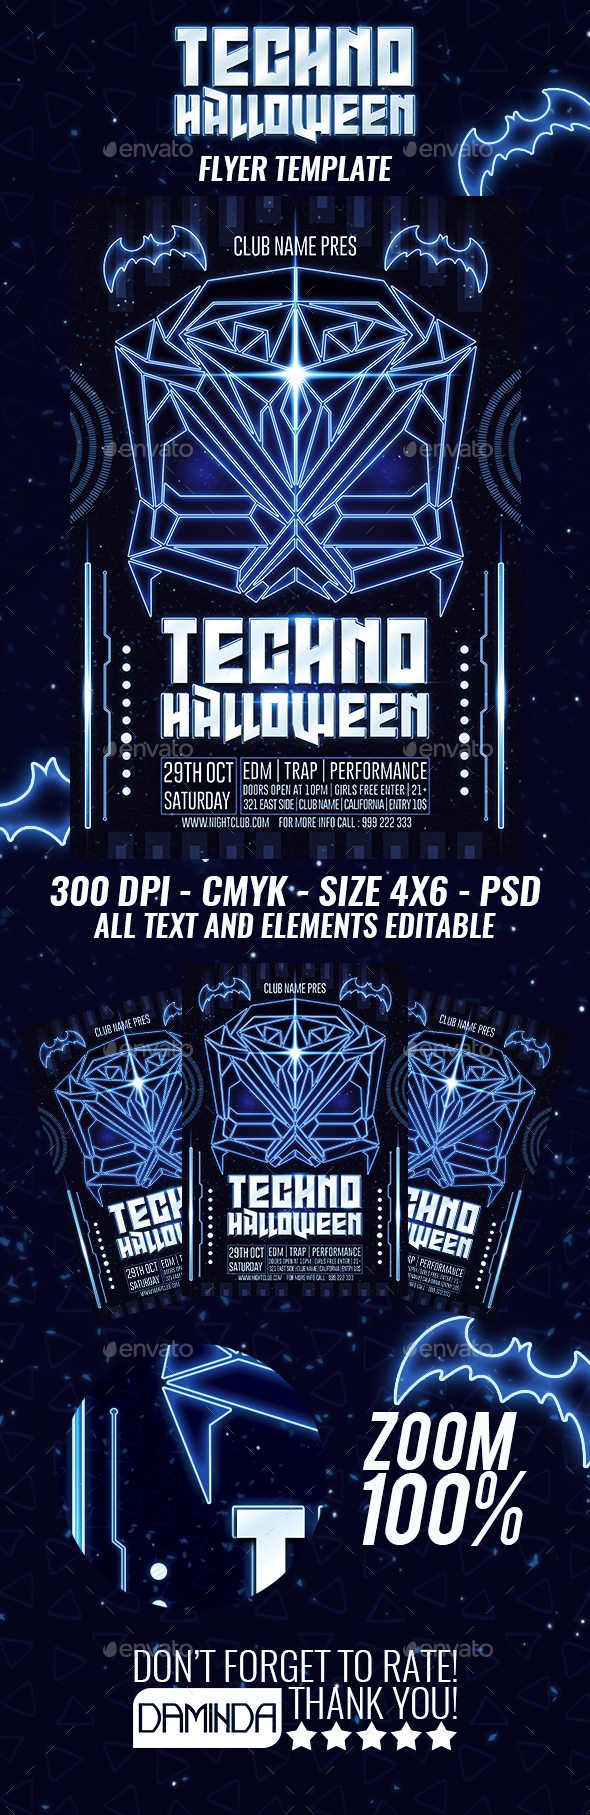 Techno Halloween Flyer Template